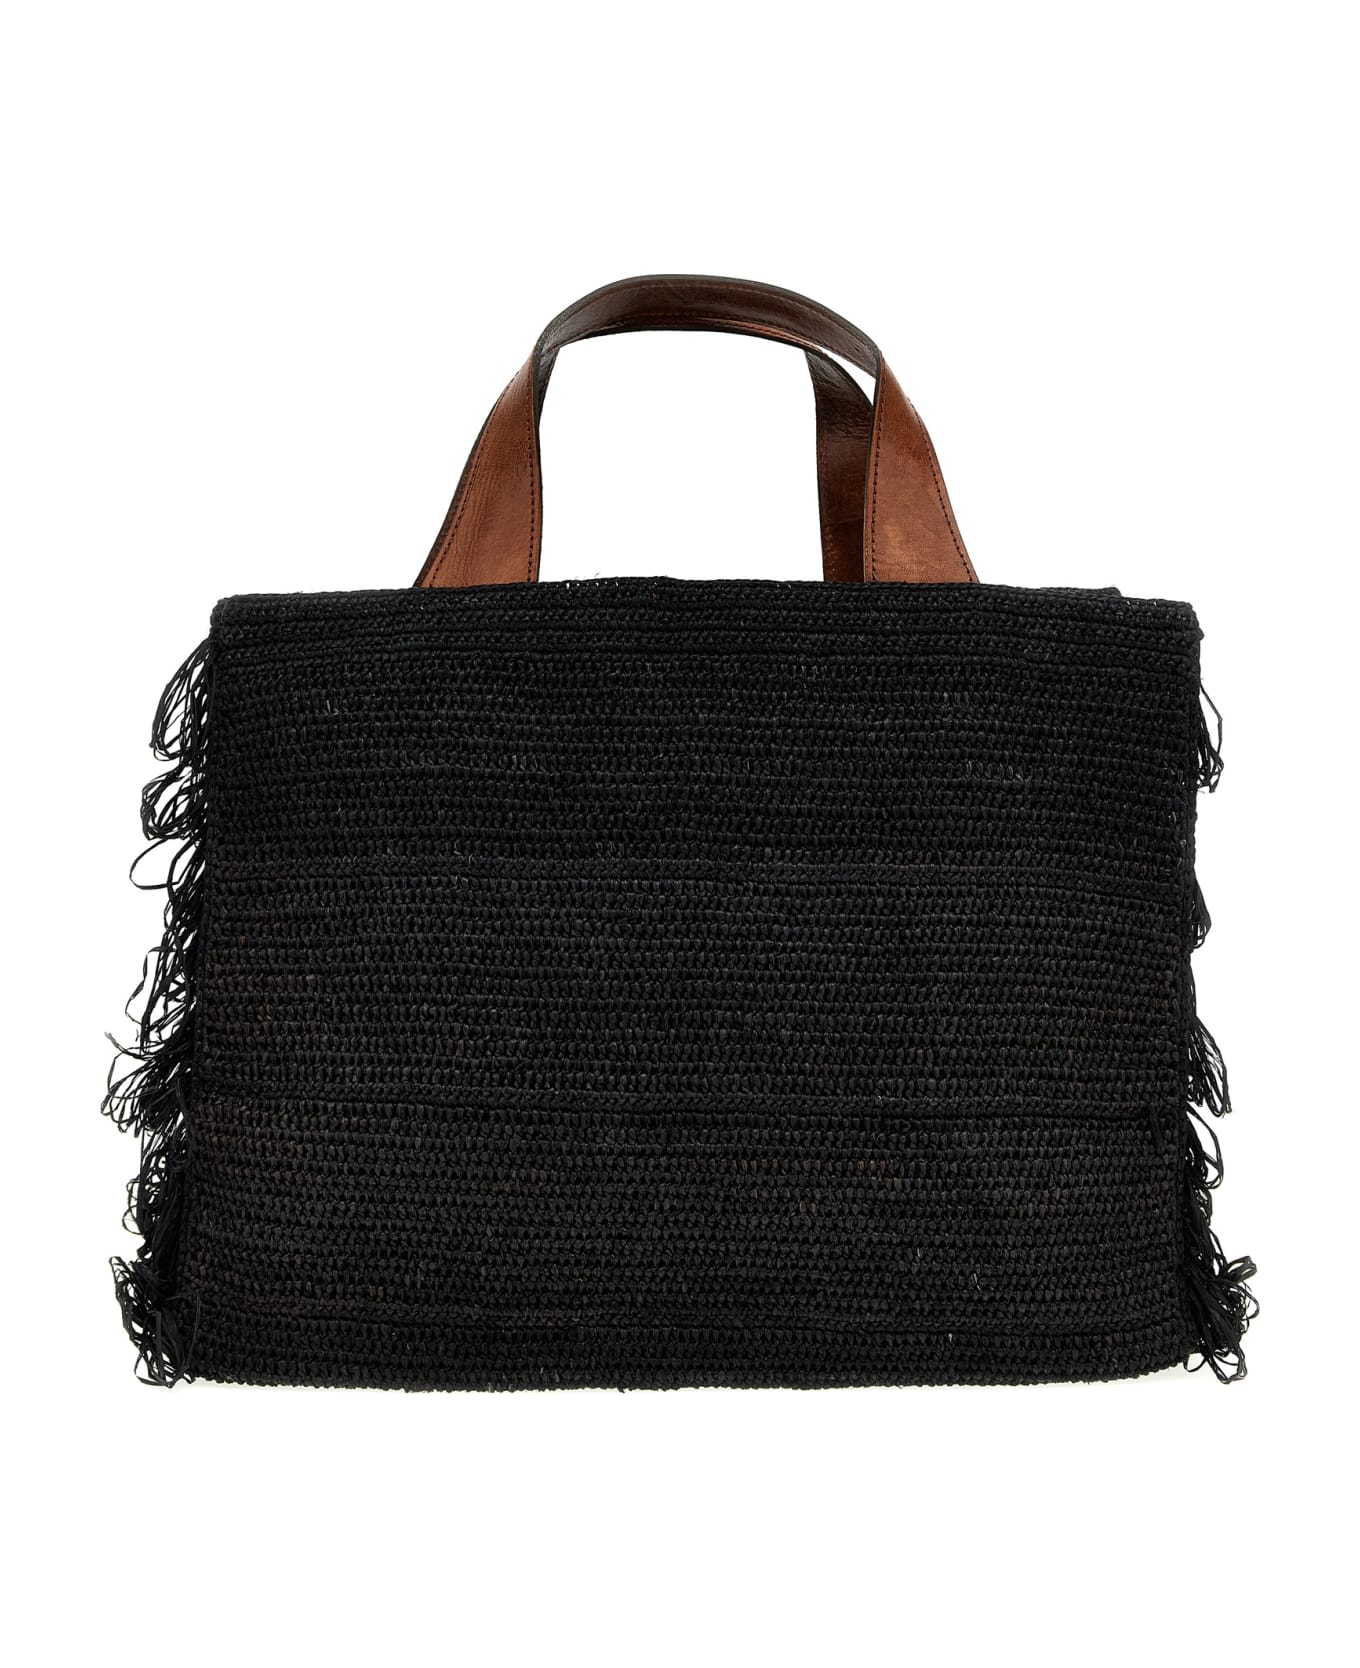 Ibeliv 'onja' Handbag - Black  